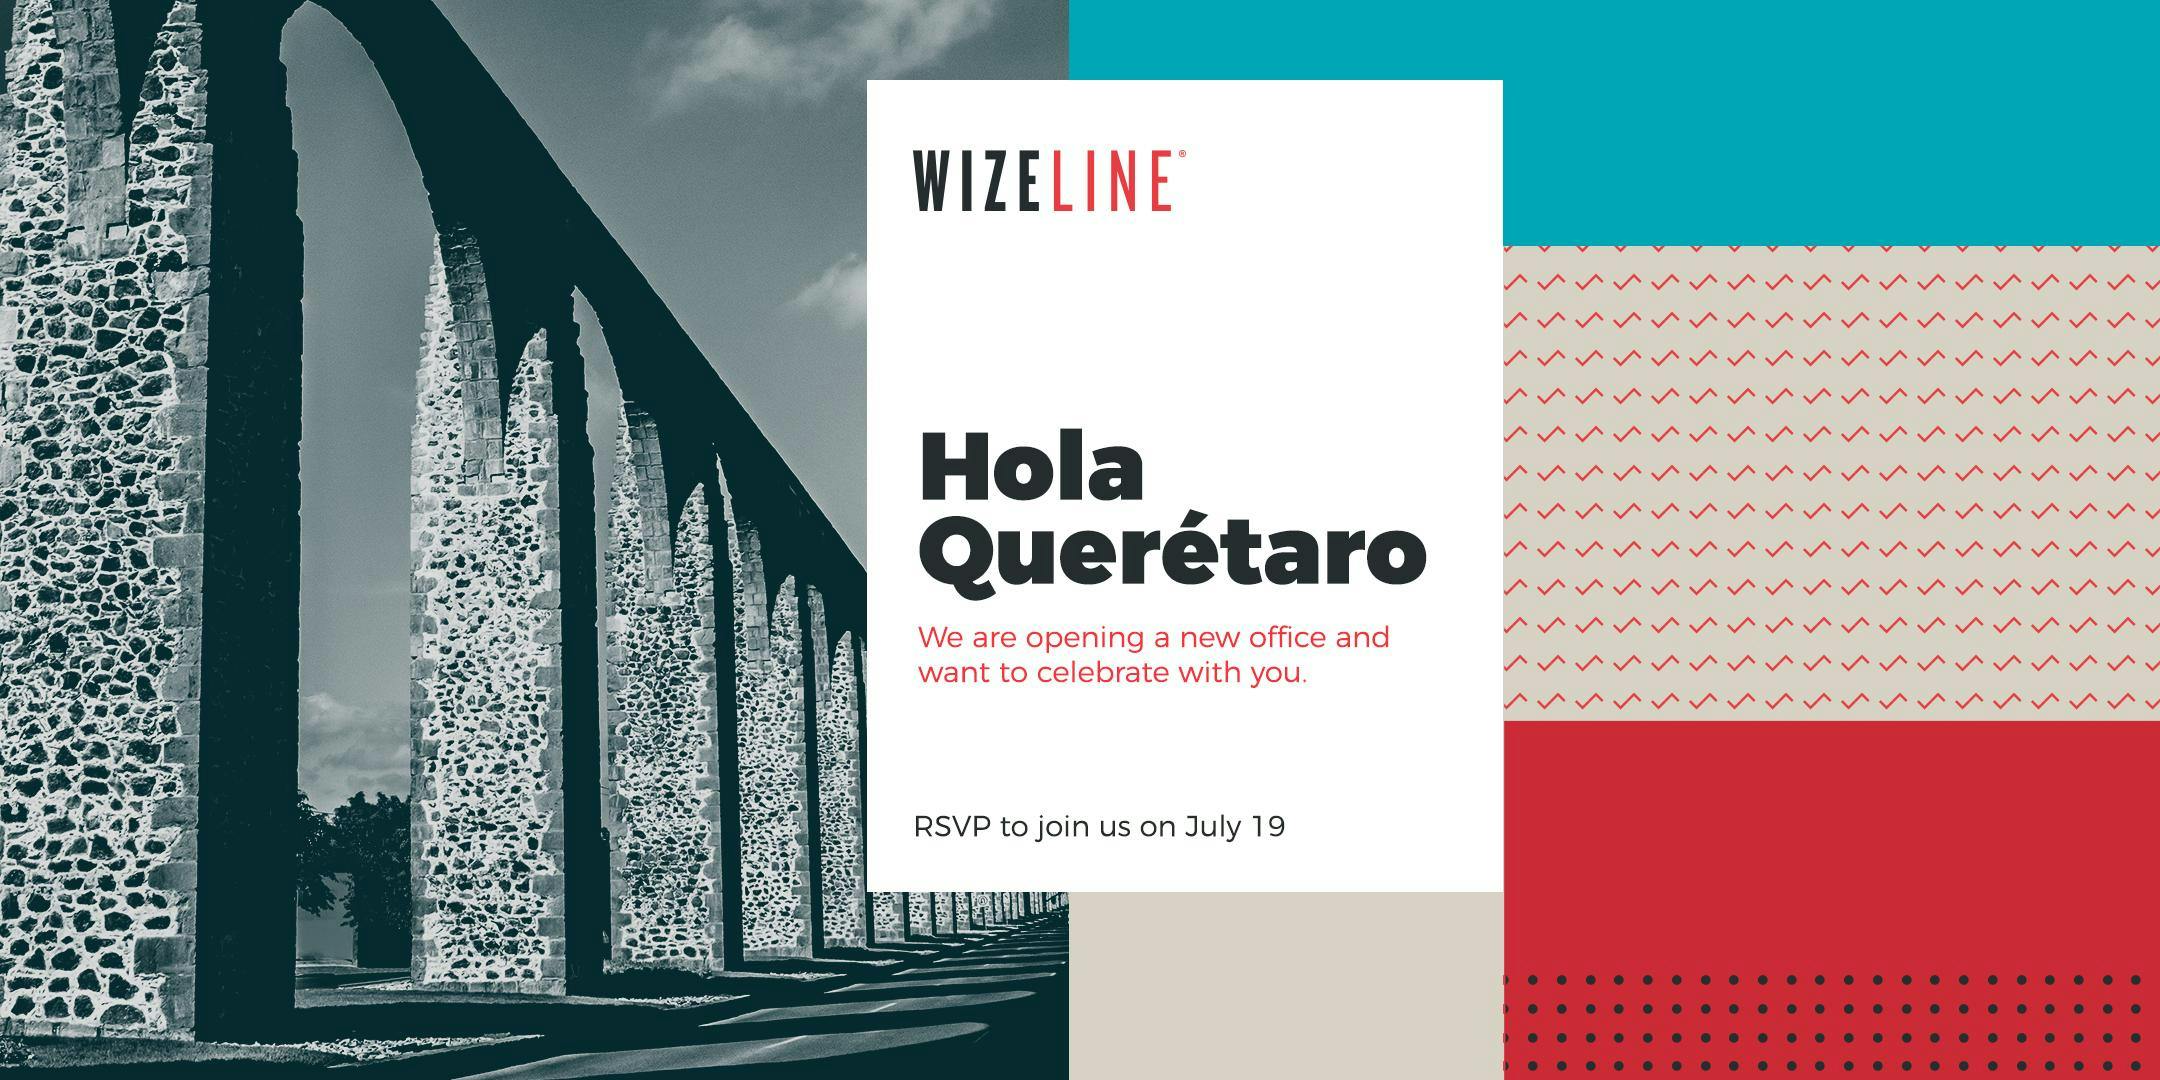 Wizeline Office Opening in Querétaro - 19 JUL 2018